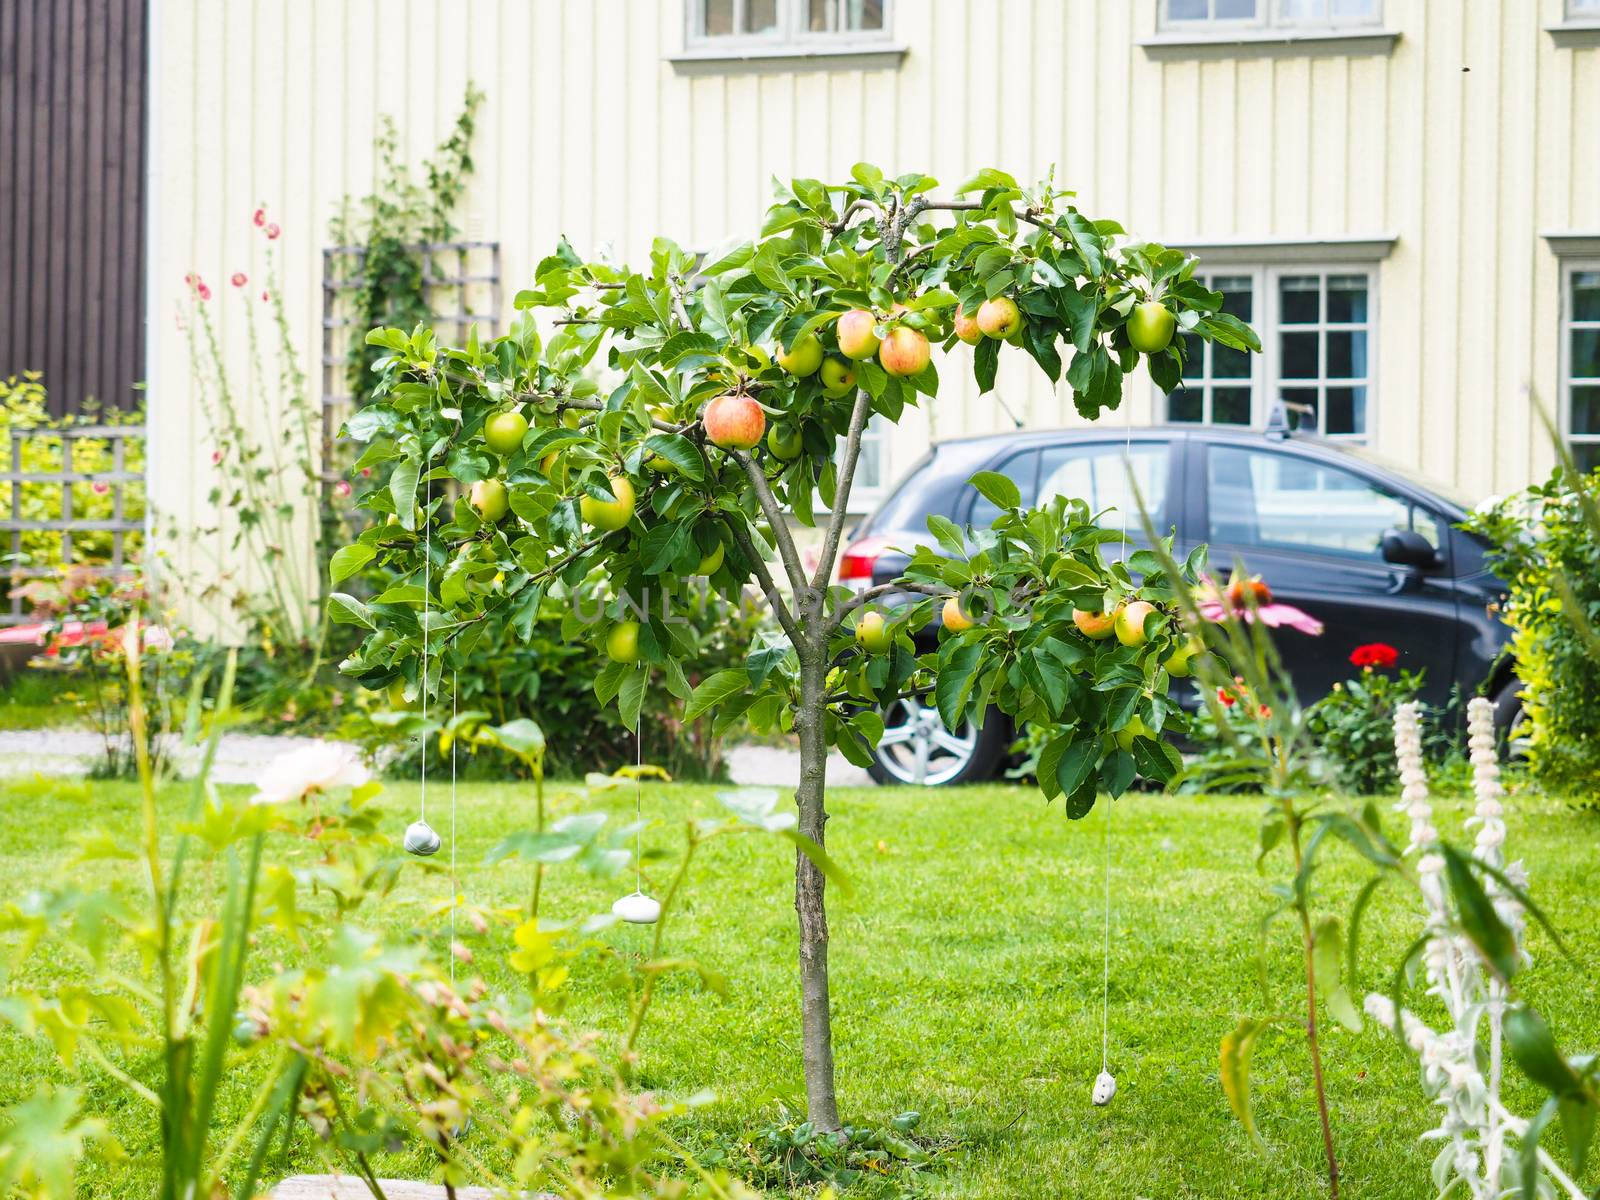 Small apple tree in front of beige house in garden, fresh green  by Arvebettum